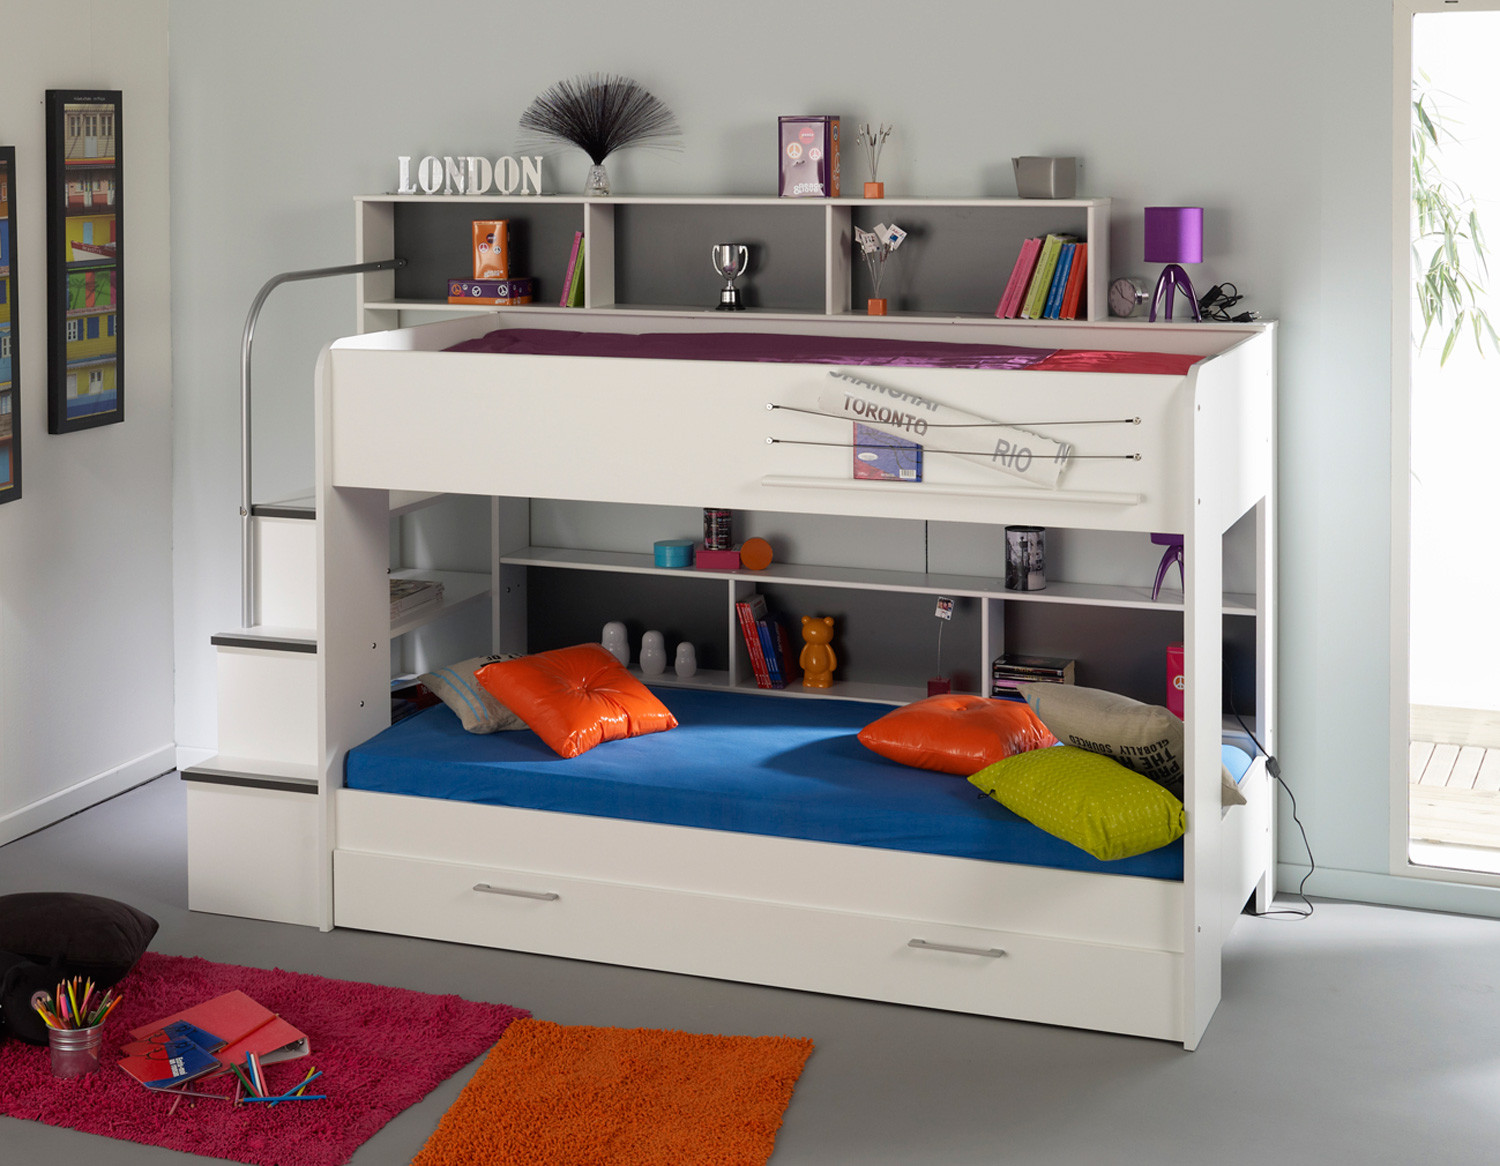 Childrens Bunk Bed With Storage
 8 Stunning Bunk Beds For Kids Design InOutInterior